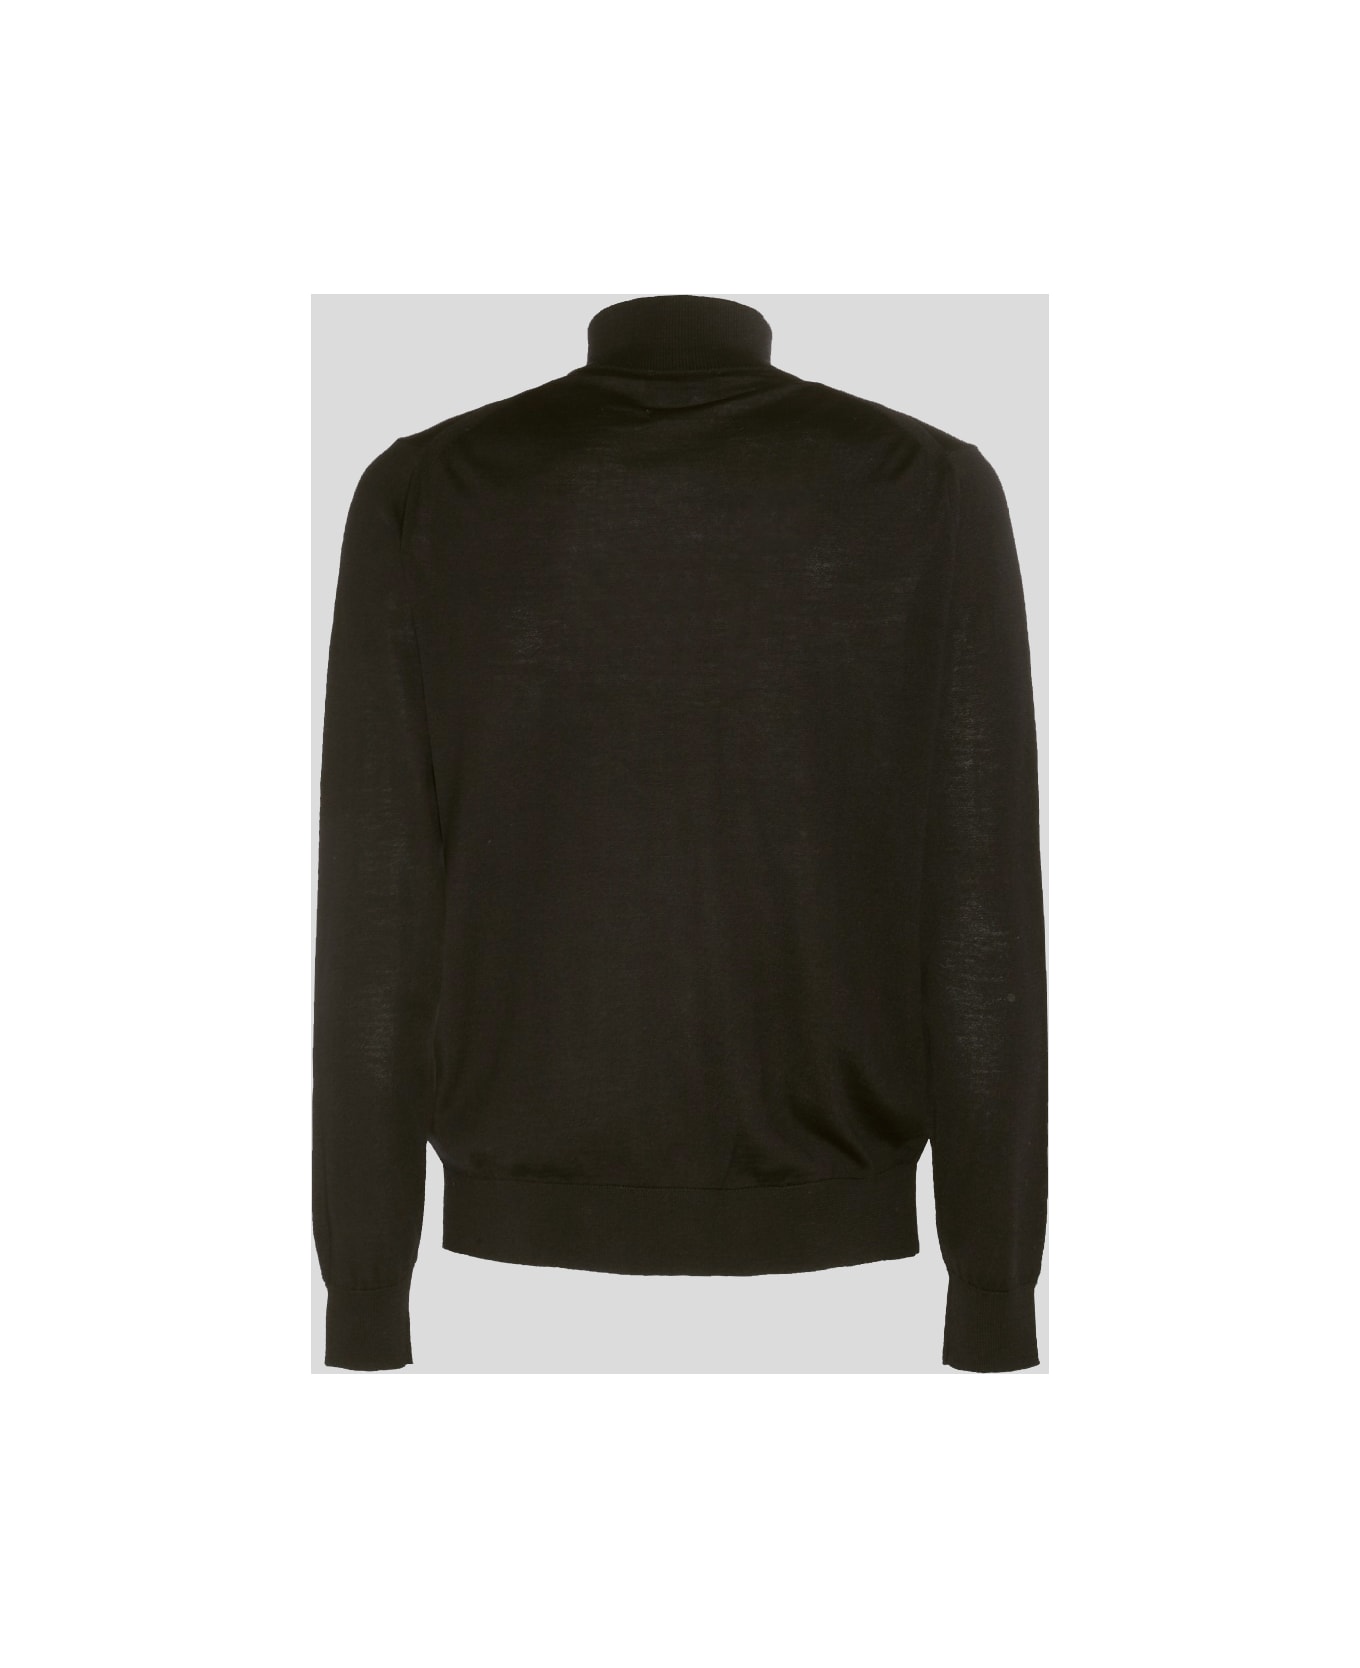 Emporio Armani Military Cotton Blend Sweater - Green